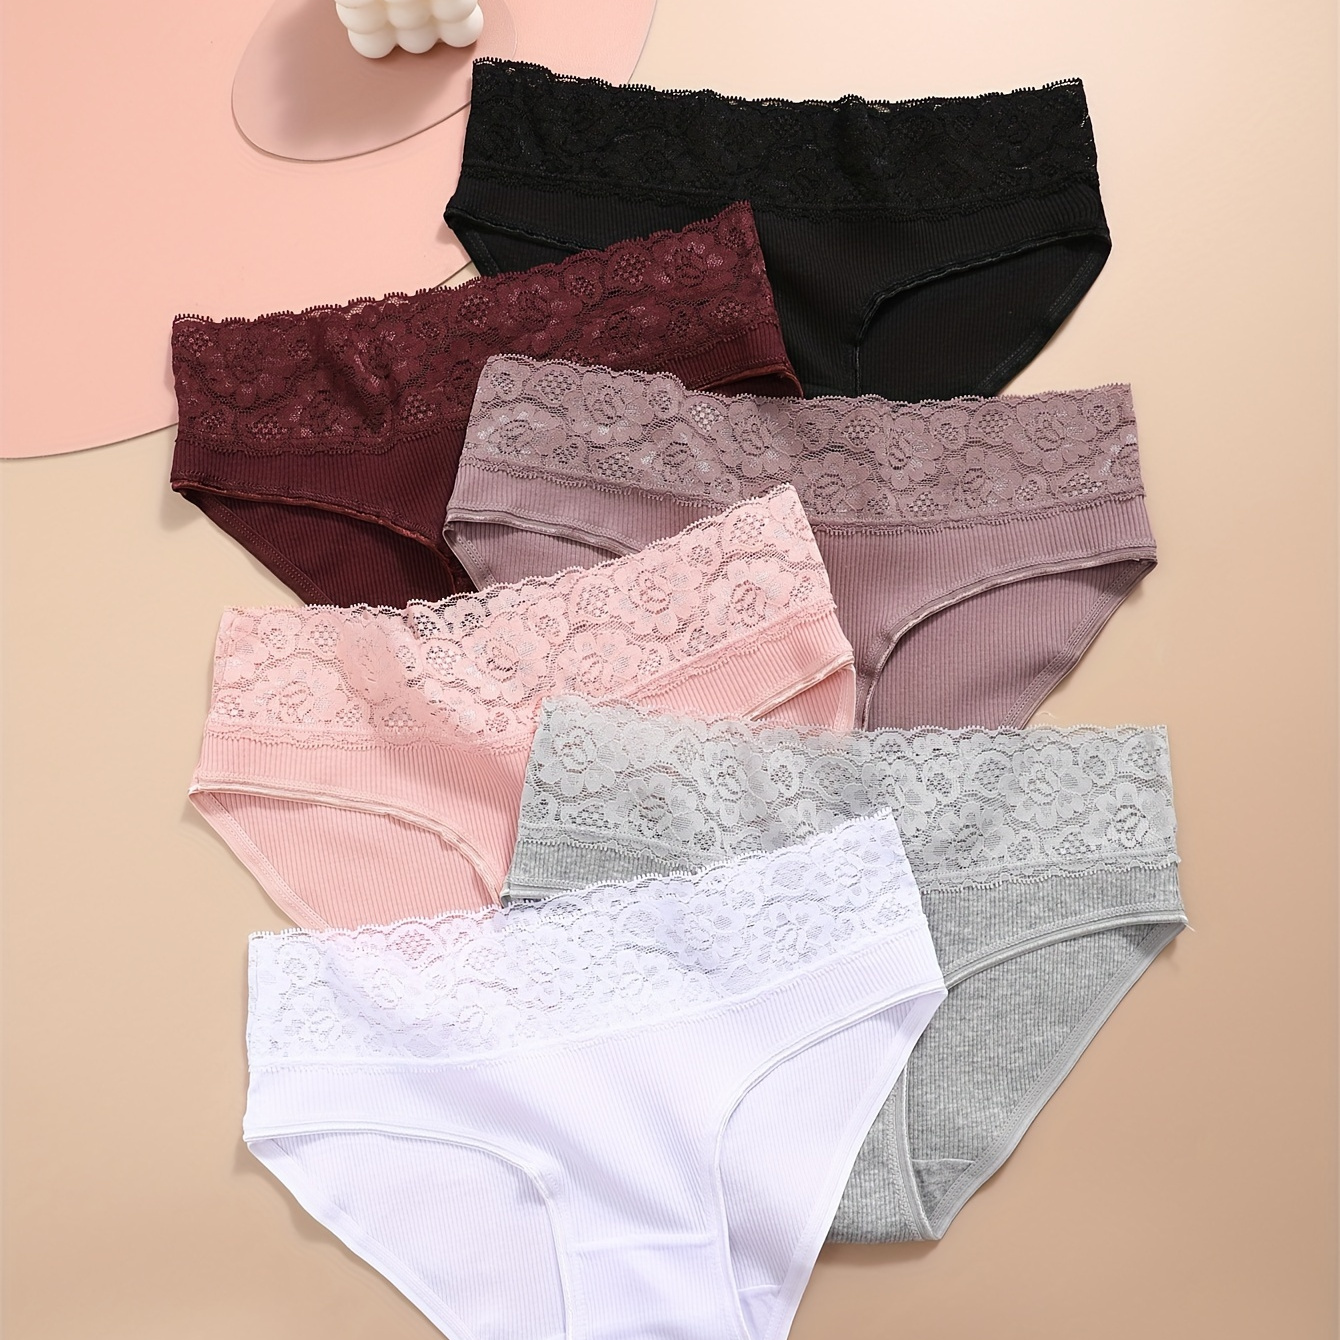 

6pcs Solid Lace Trim Briefs, Comfy Breathable Stretchy Intimates Panties, Women's Lingerie & Underwear